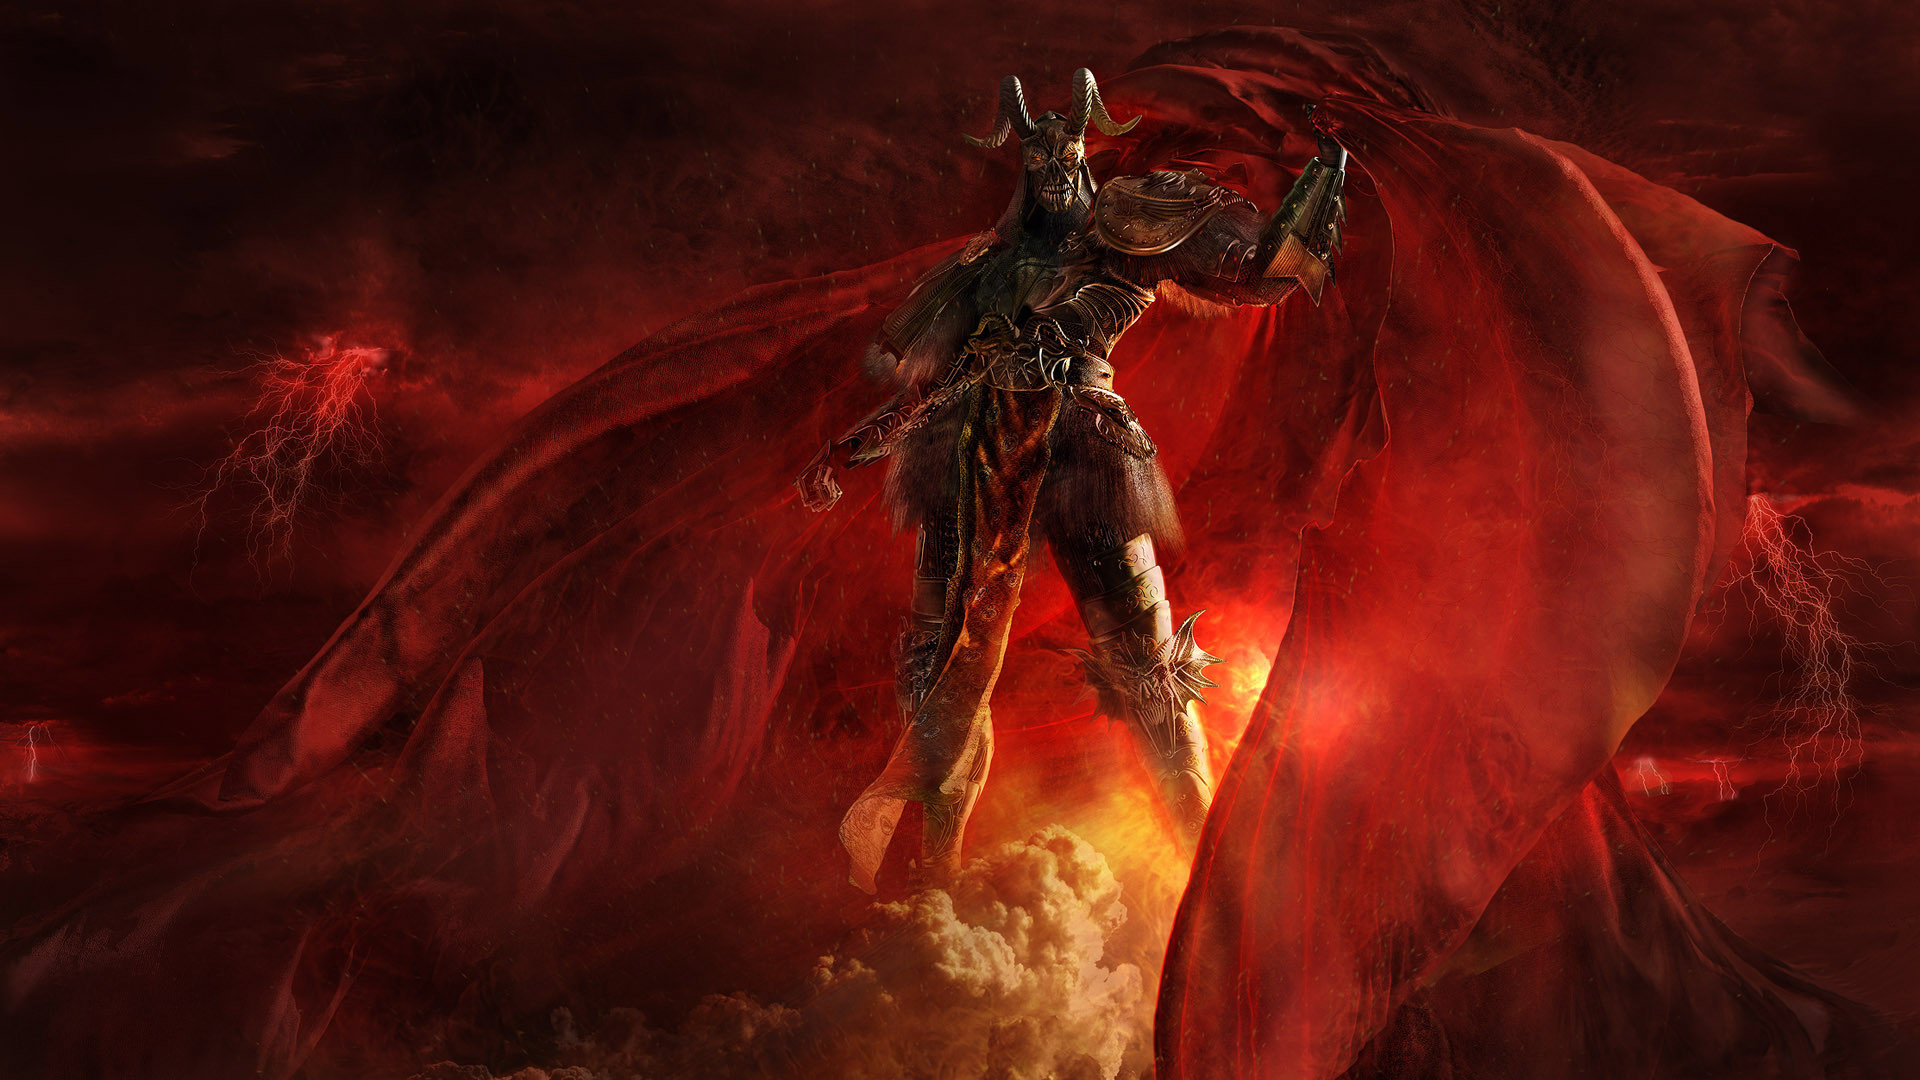 1920x1080 Dark Demon Warhammer Evil Artistic Hell Hd Red Fire Fantasy Wallpaper